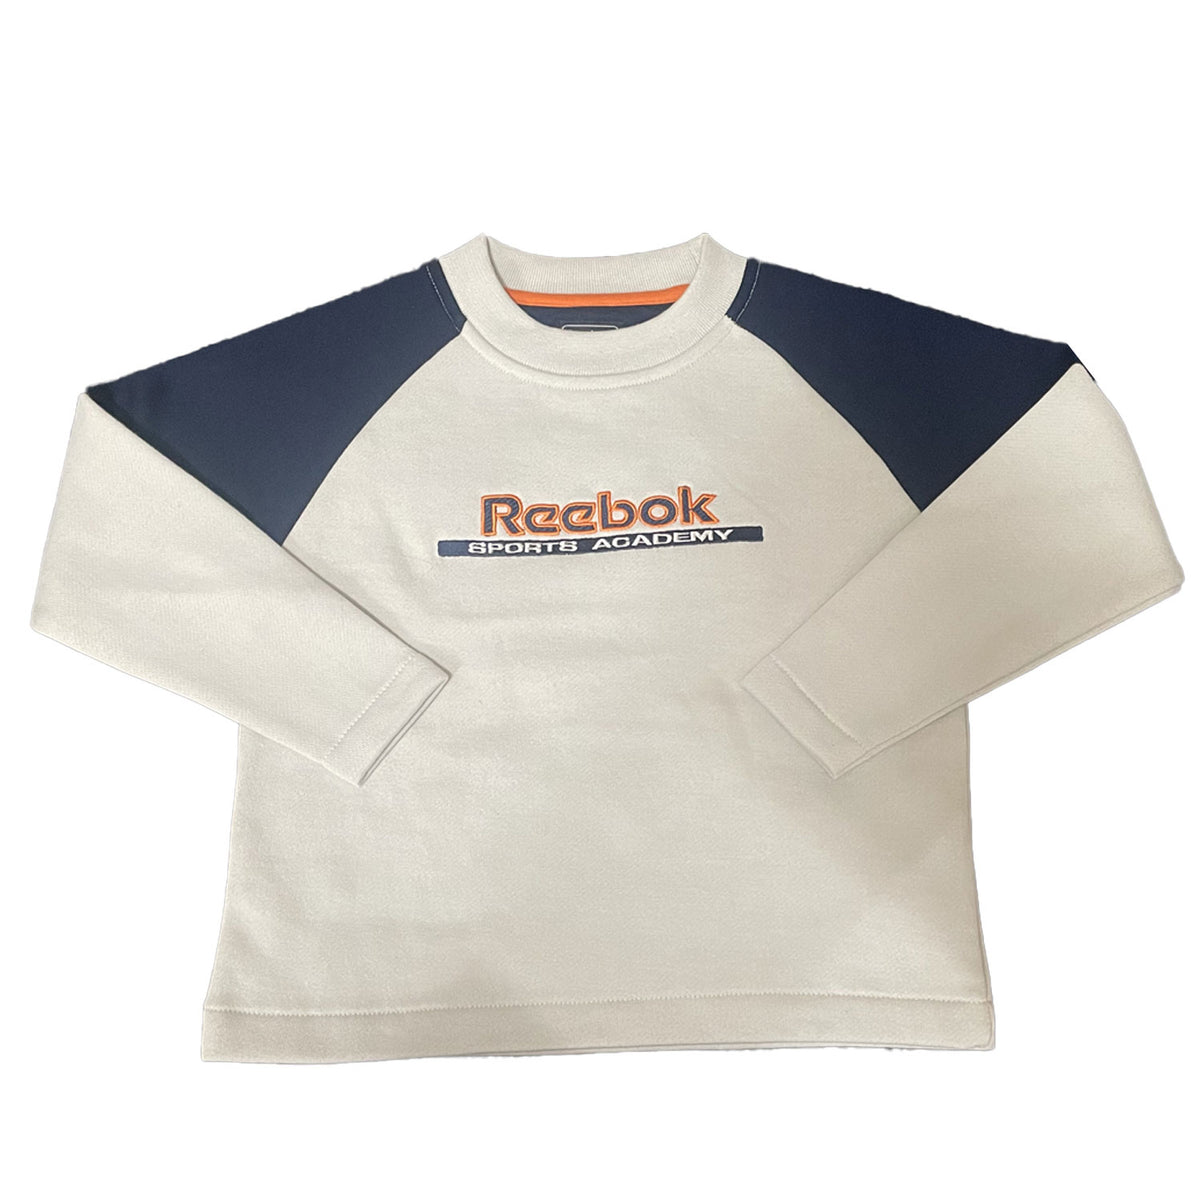 Reebok Sport Academy Infants Sweatshirt 4